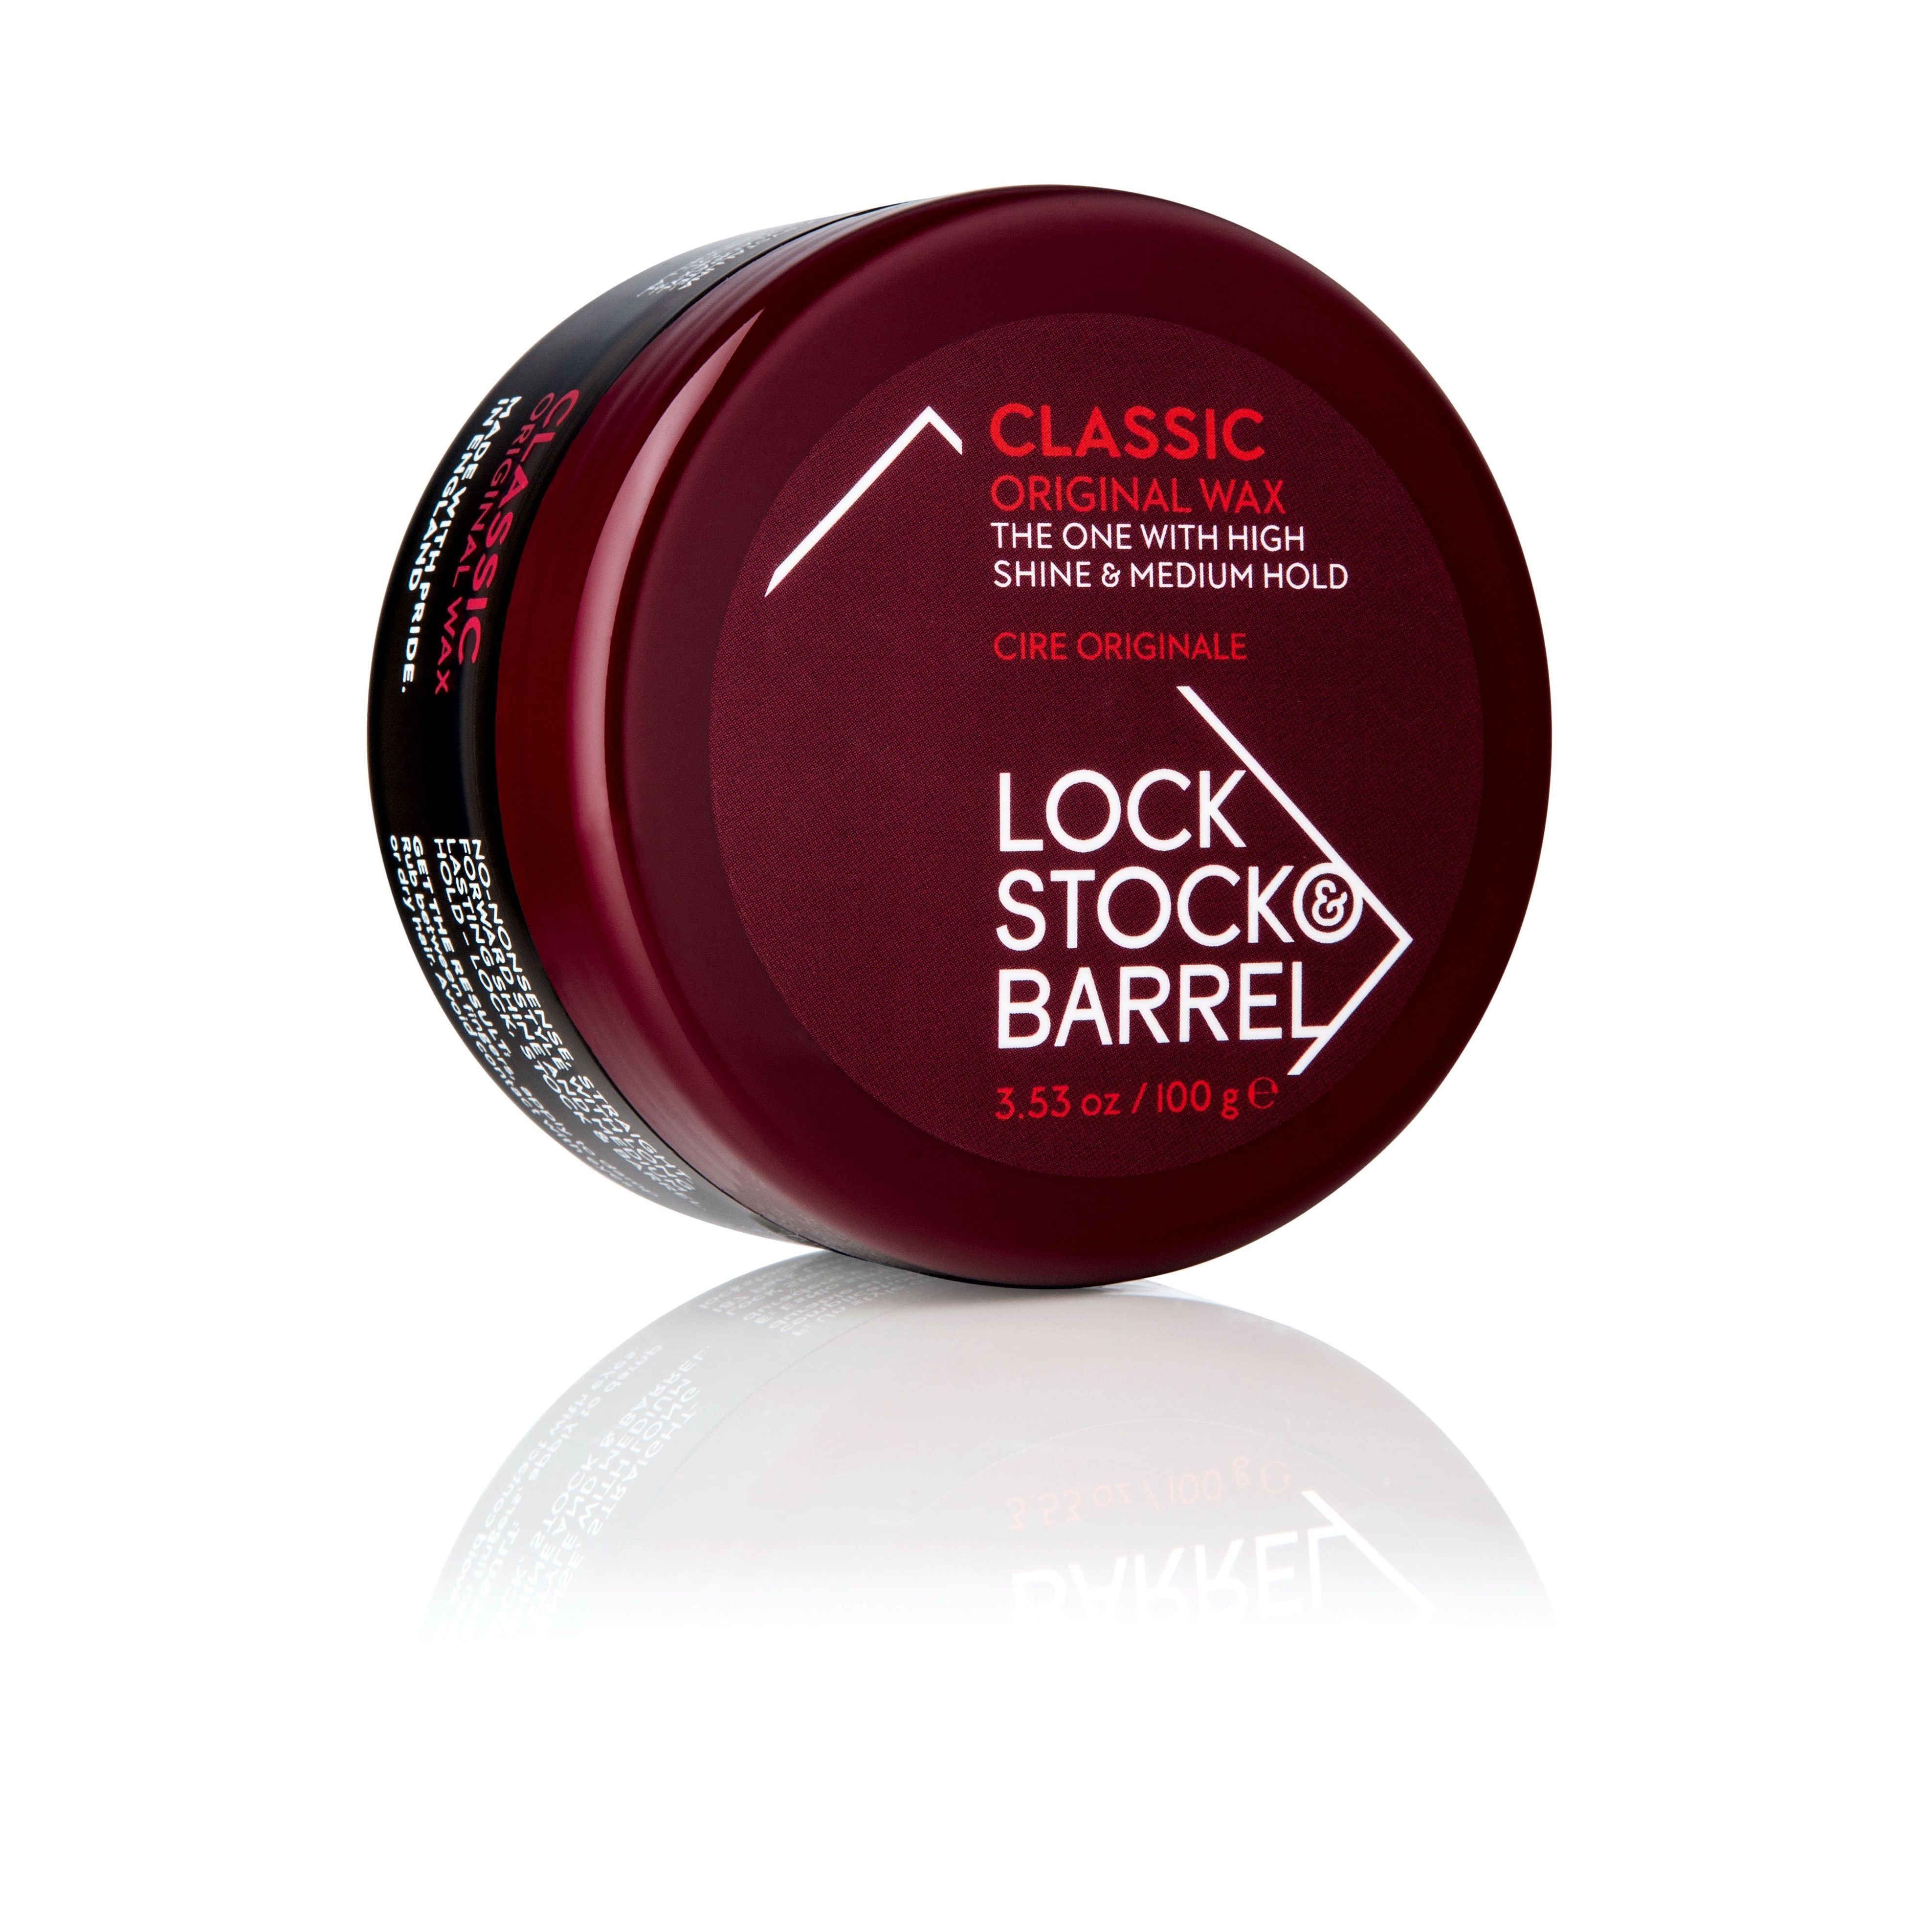 Воск для укладки волос Lock Stock & Barrel Original Classic Wax мужской 100 мл 1pcs cpt50145 cpt50235 cpt600100d cpt40045 cpt50045 cpt30045 original stock